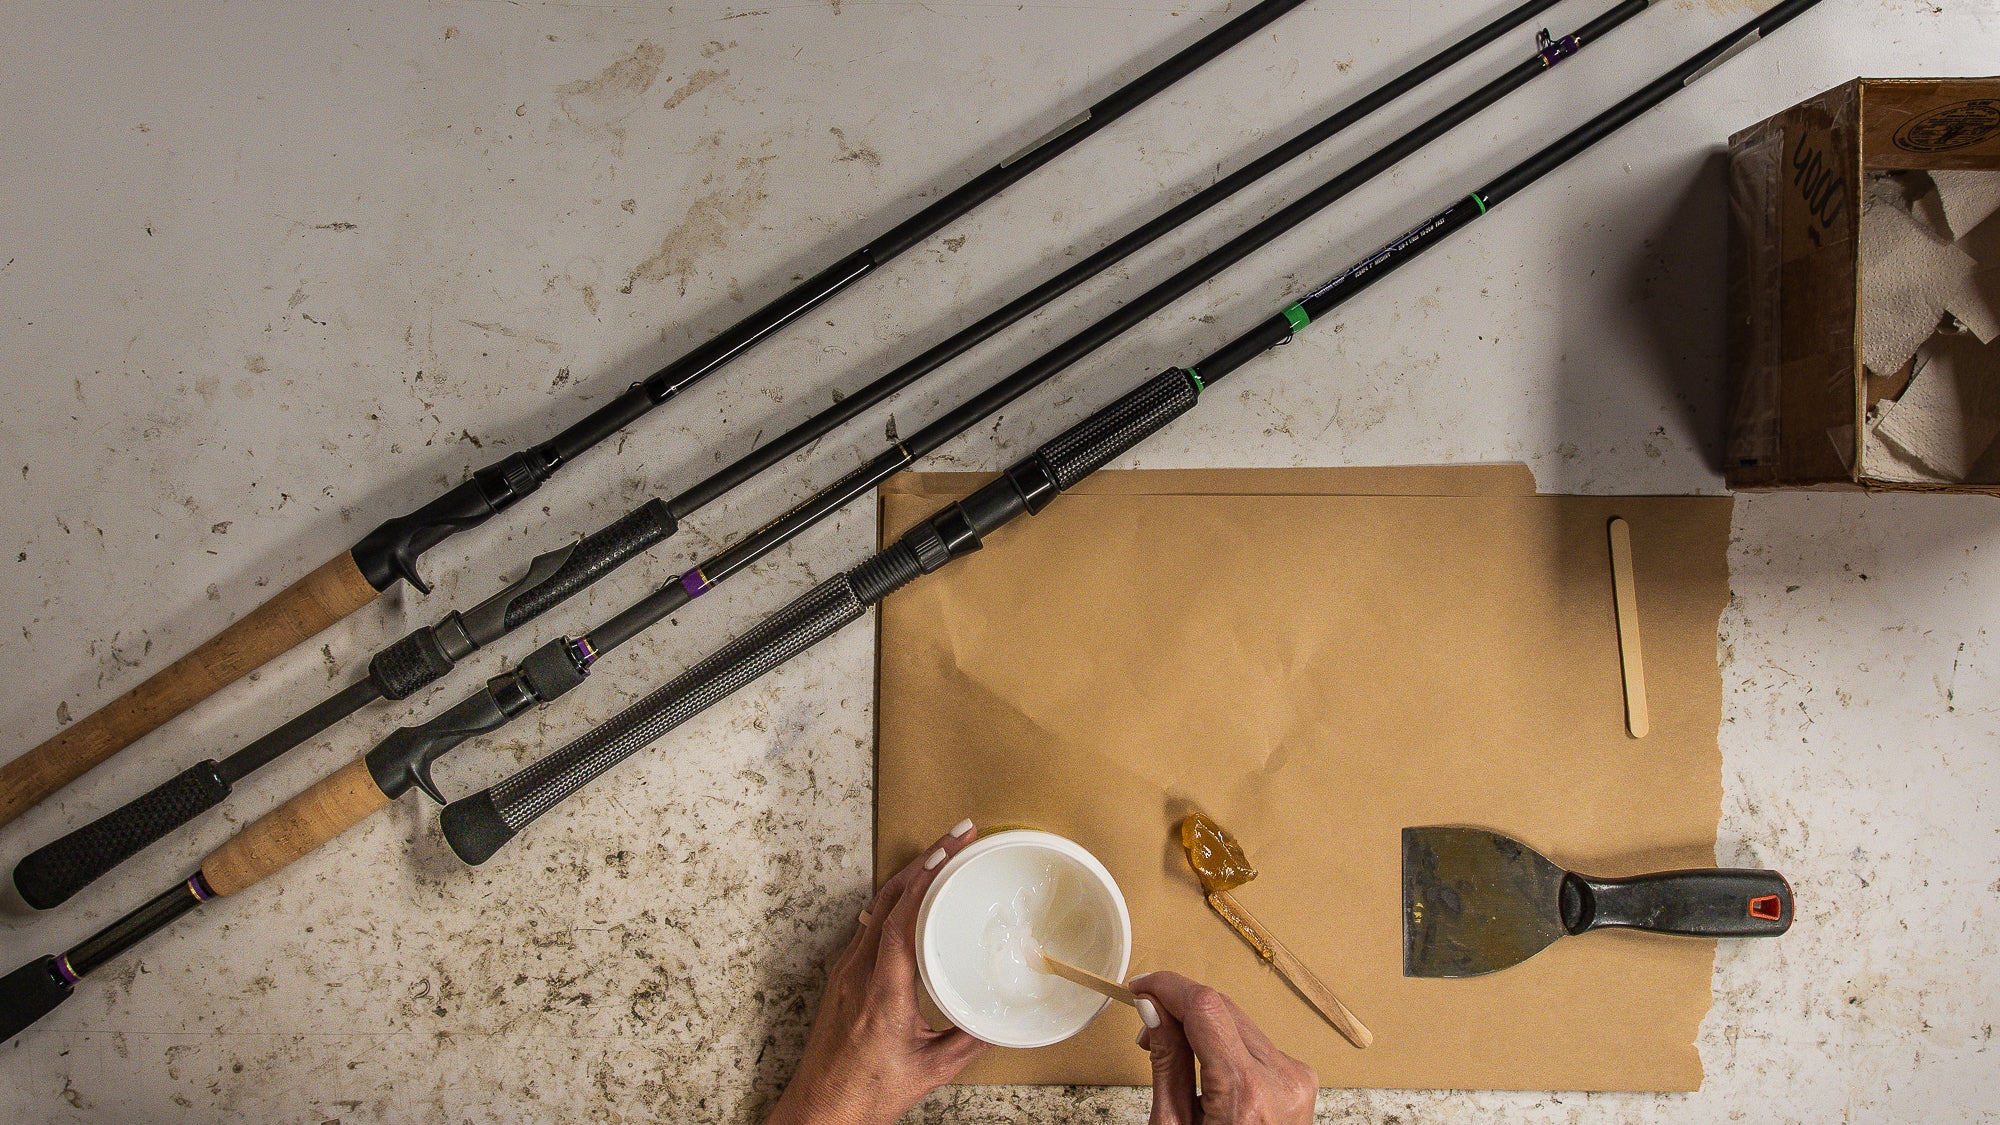 Custom Bass Fishing Rods - We build them!